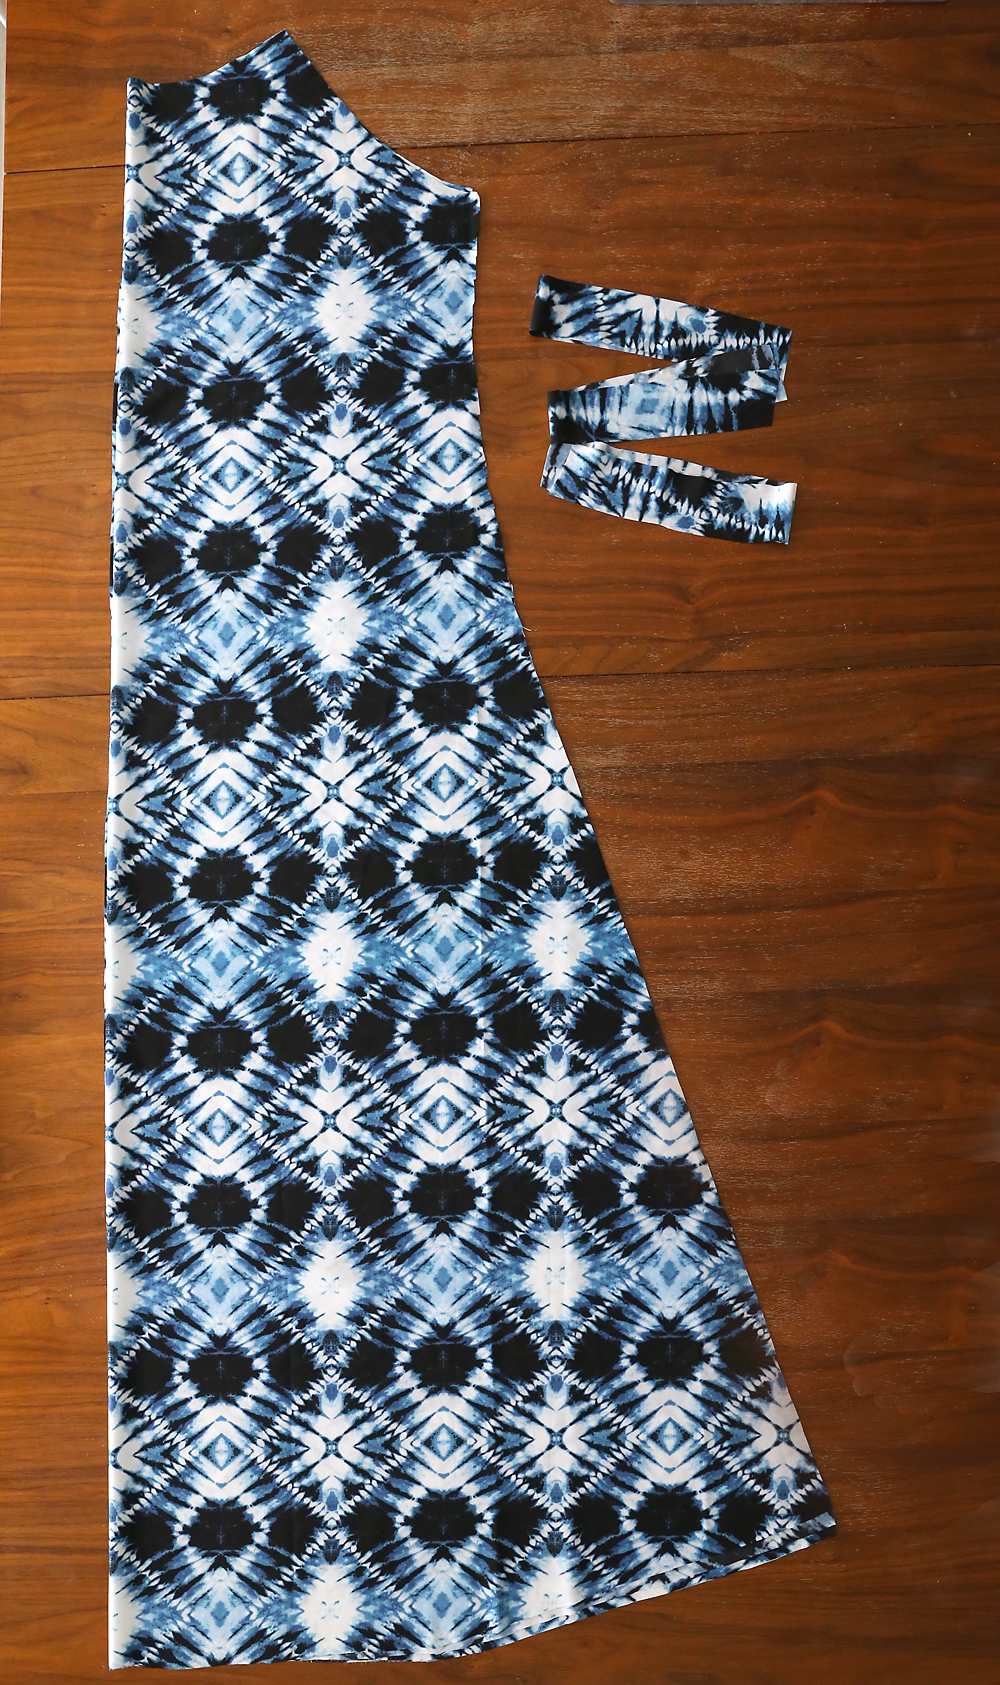 Dress pattern piece and tie pattern piece